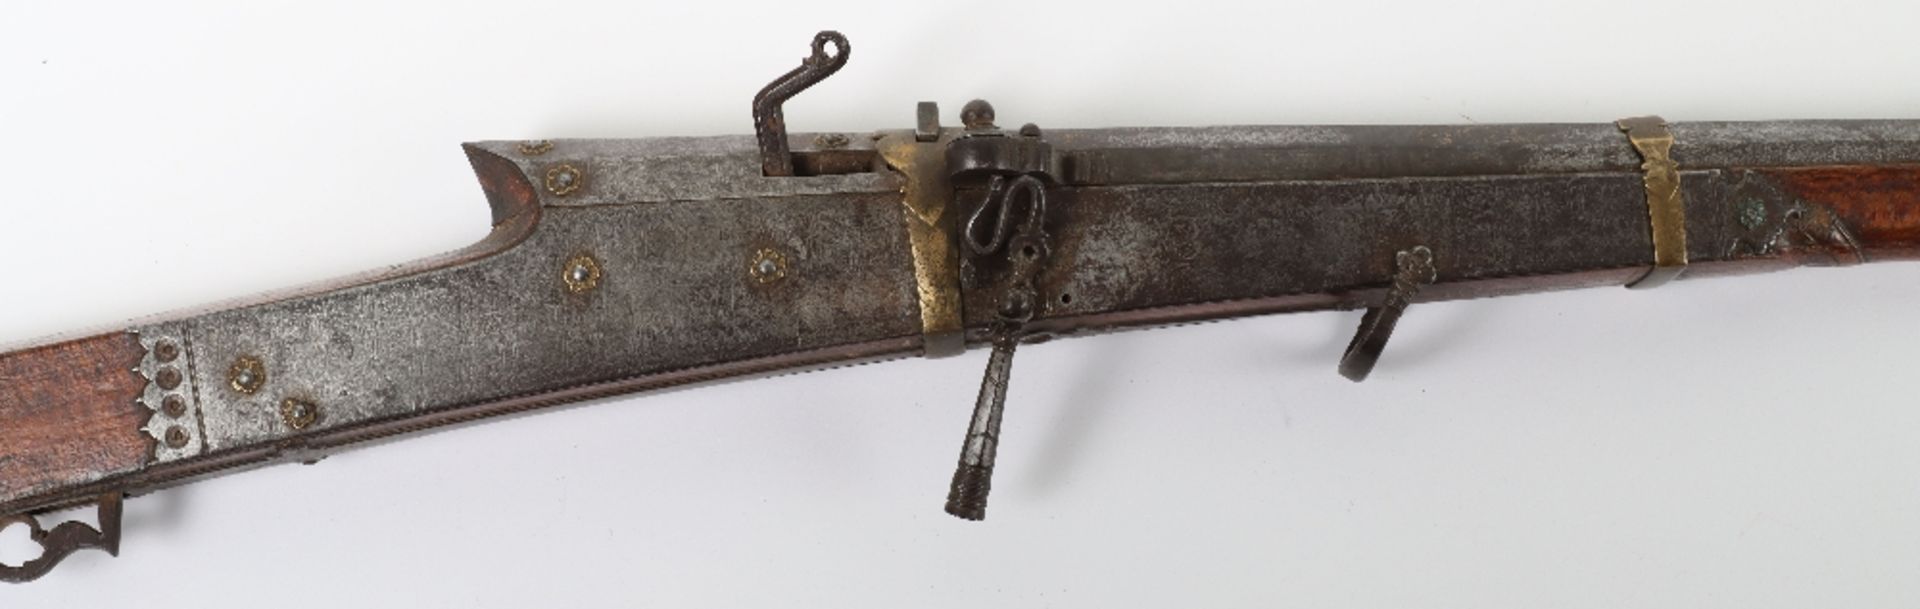 32 Bore Indian Matchlock Gun Torador, Probably Punjab First Half of the 19th Century - Image 2 of 11